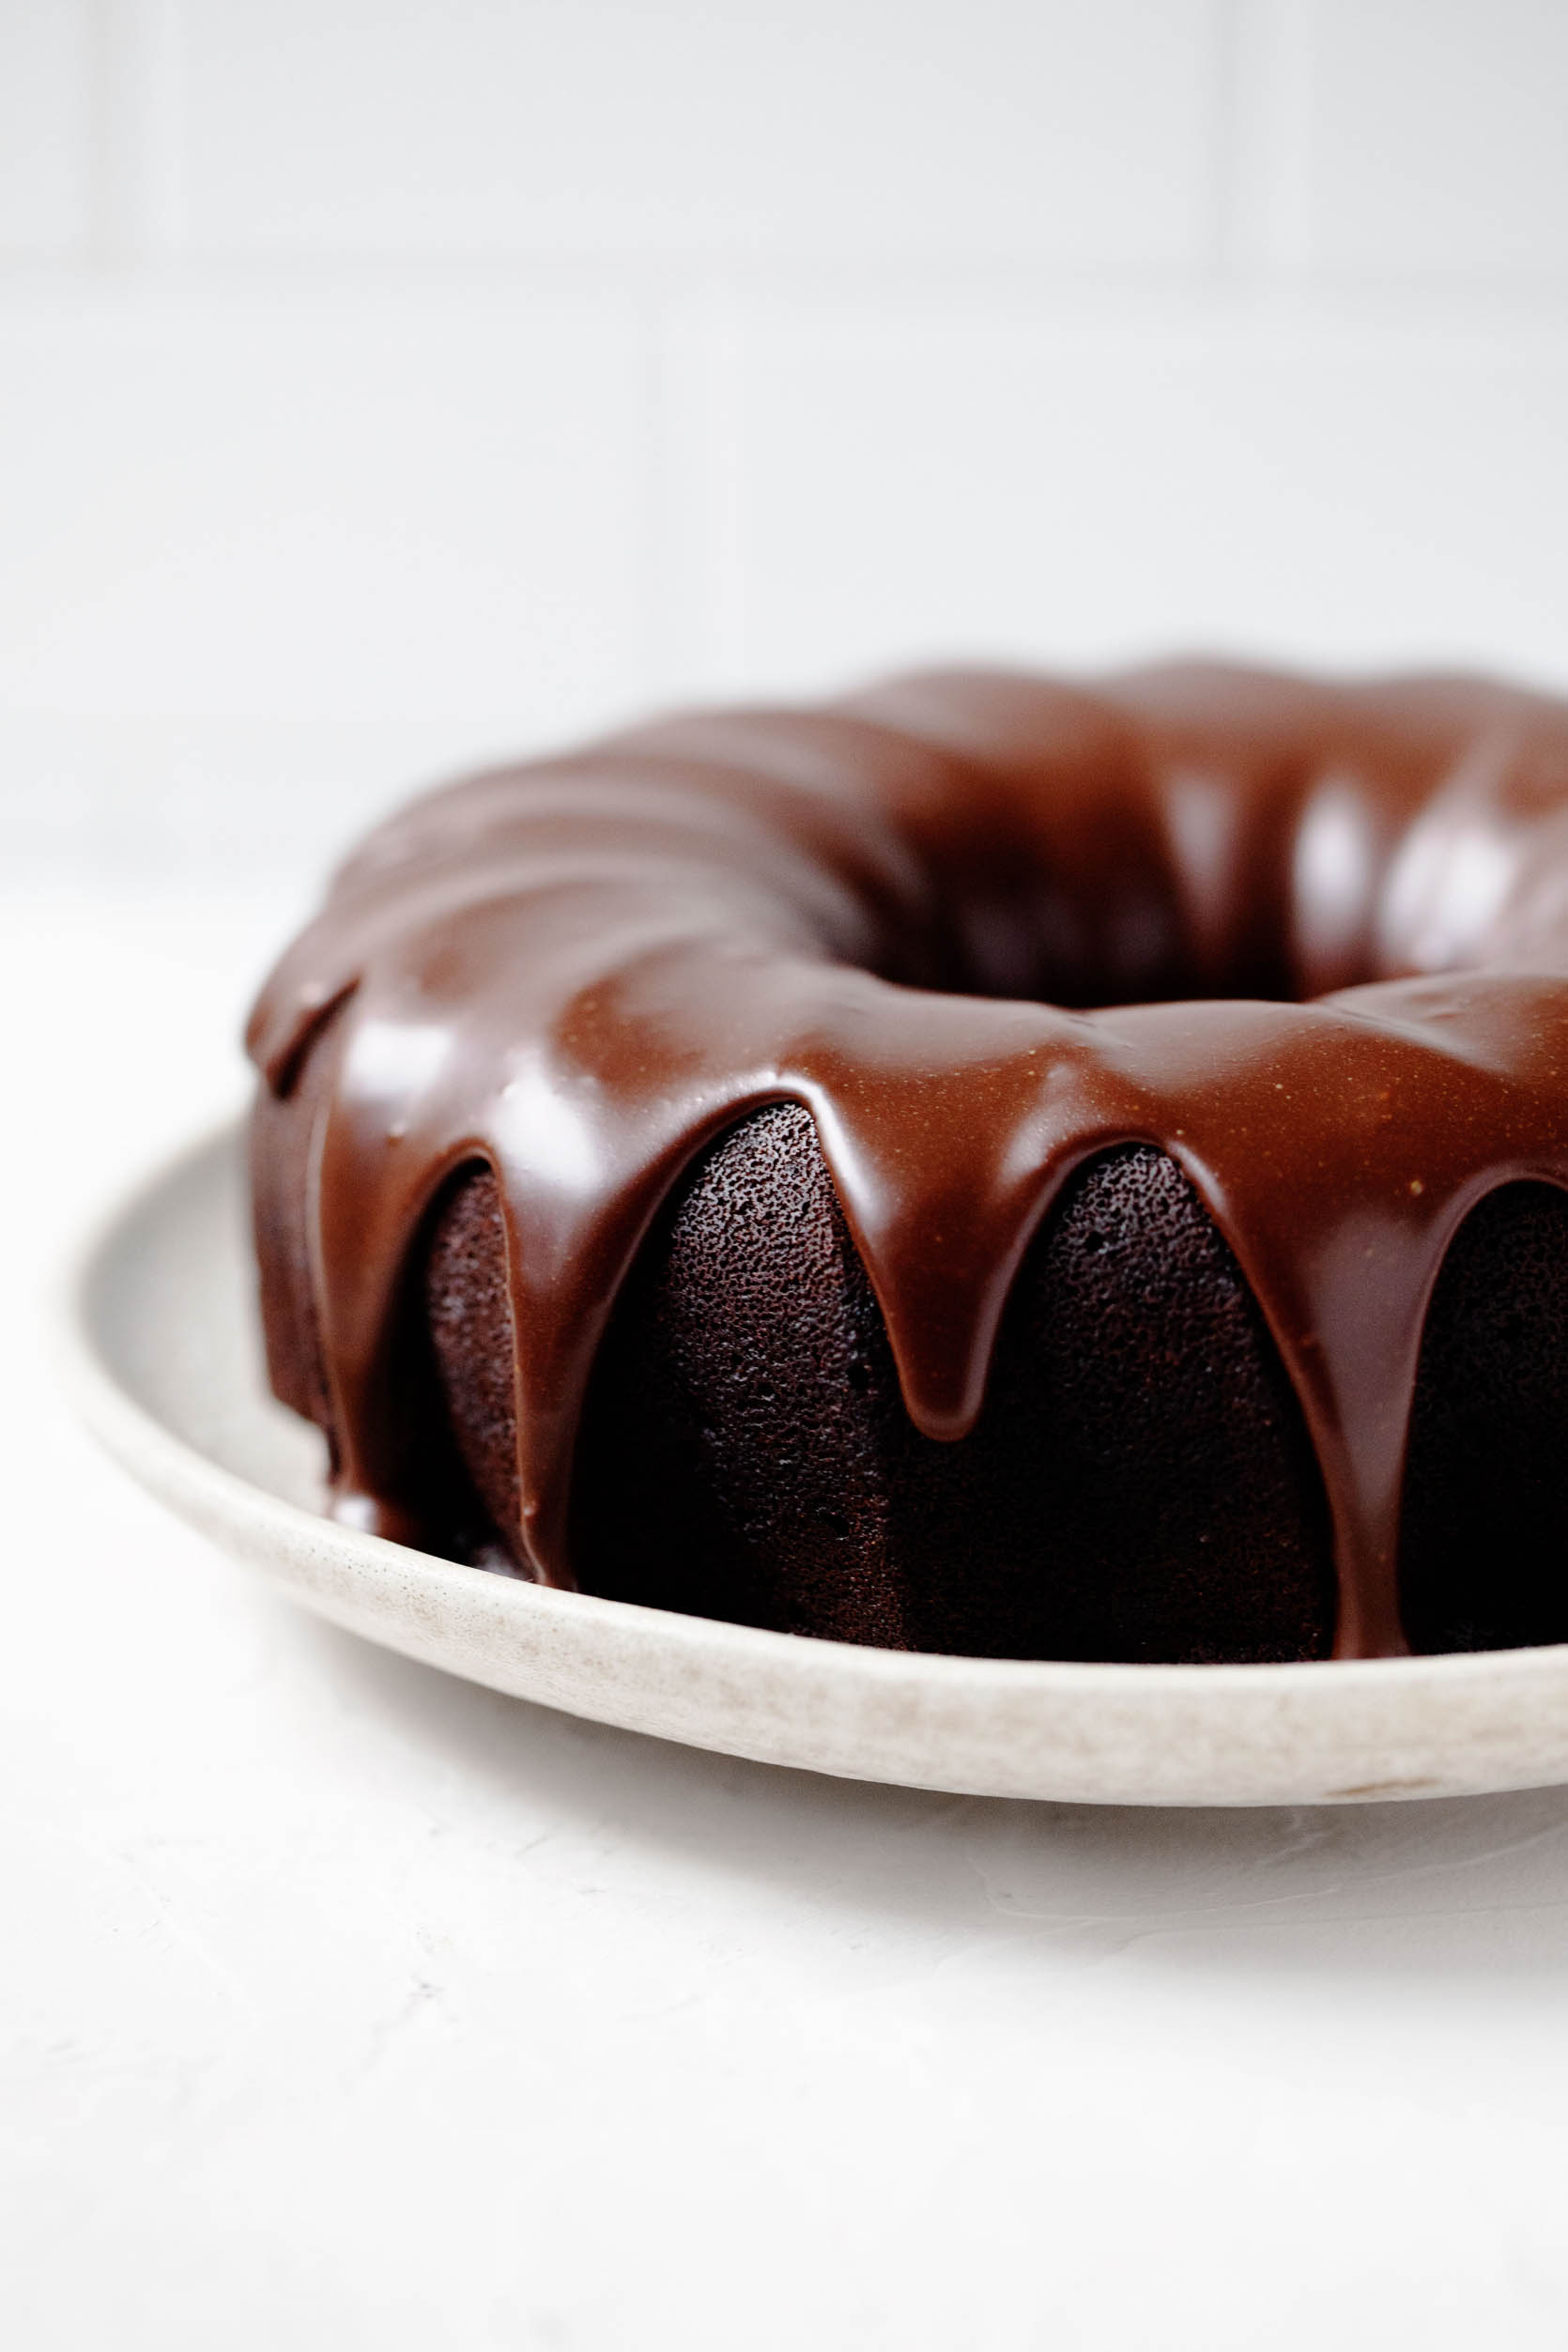 Moist, vegan Chocolate Cherry Bundt Cake - Zucker&Jagdwurst